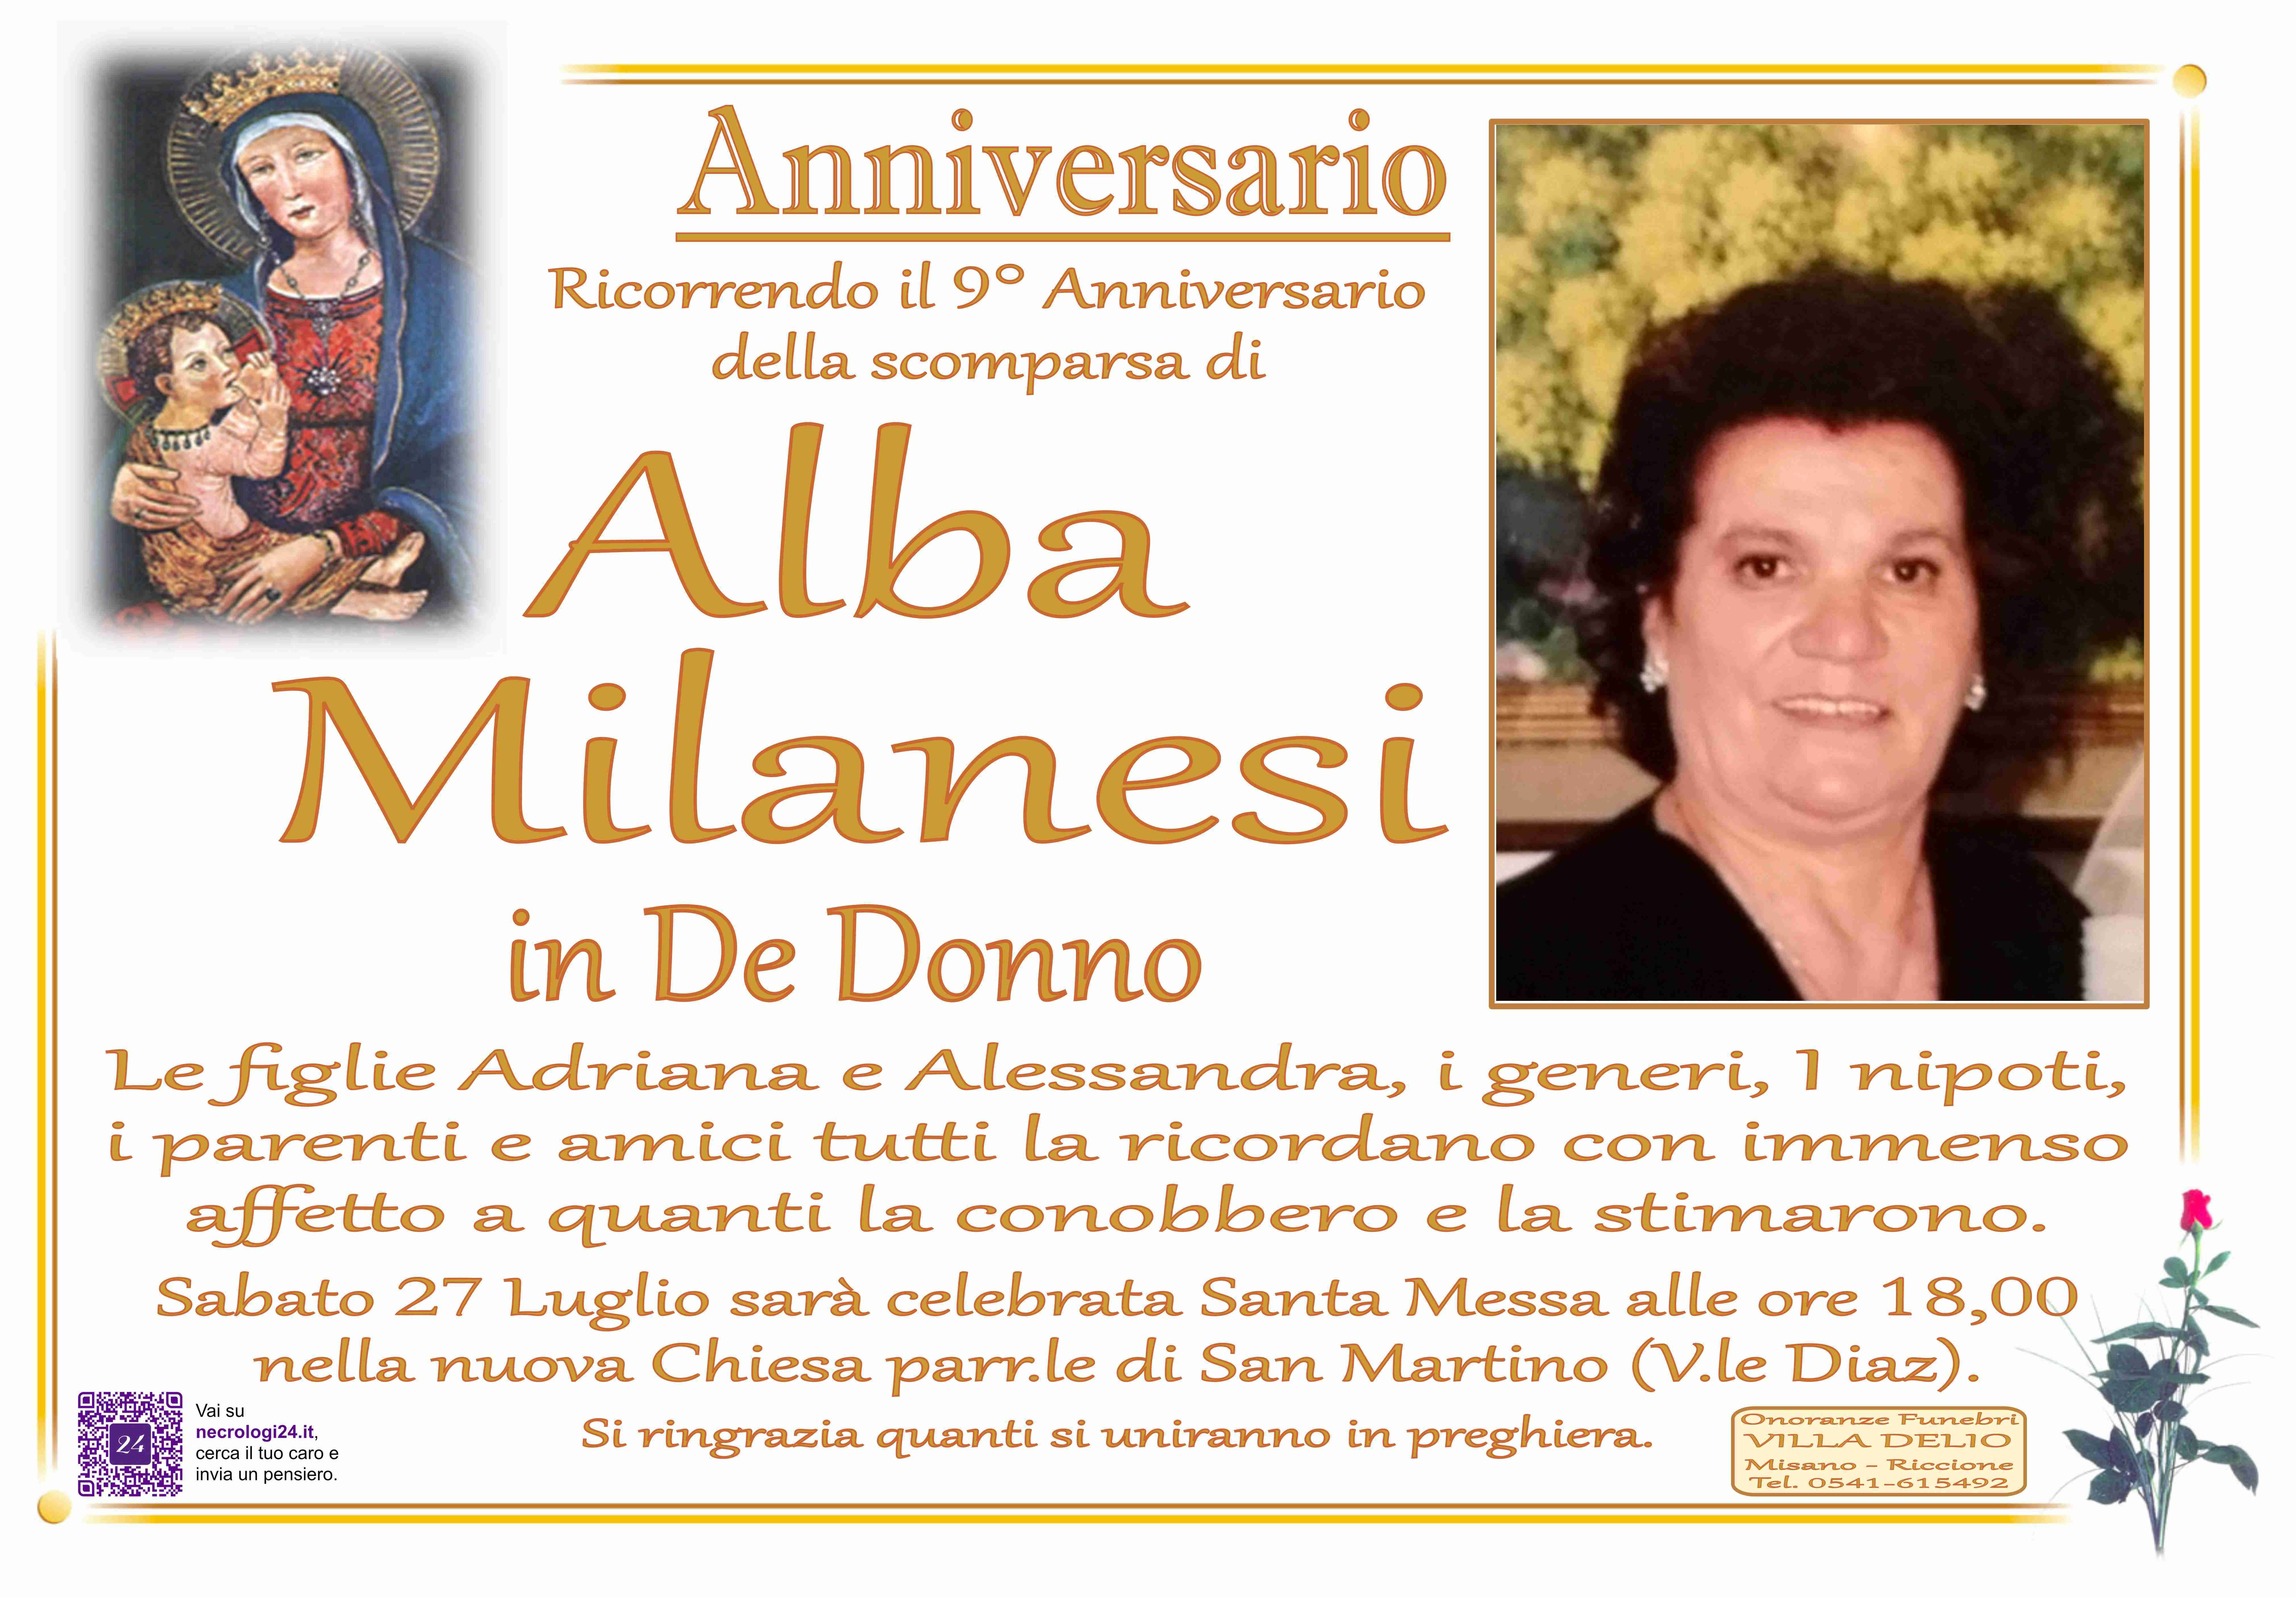 Alba Milanesi in De Donno